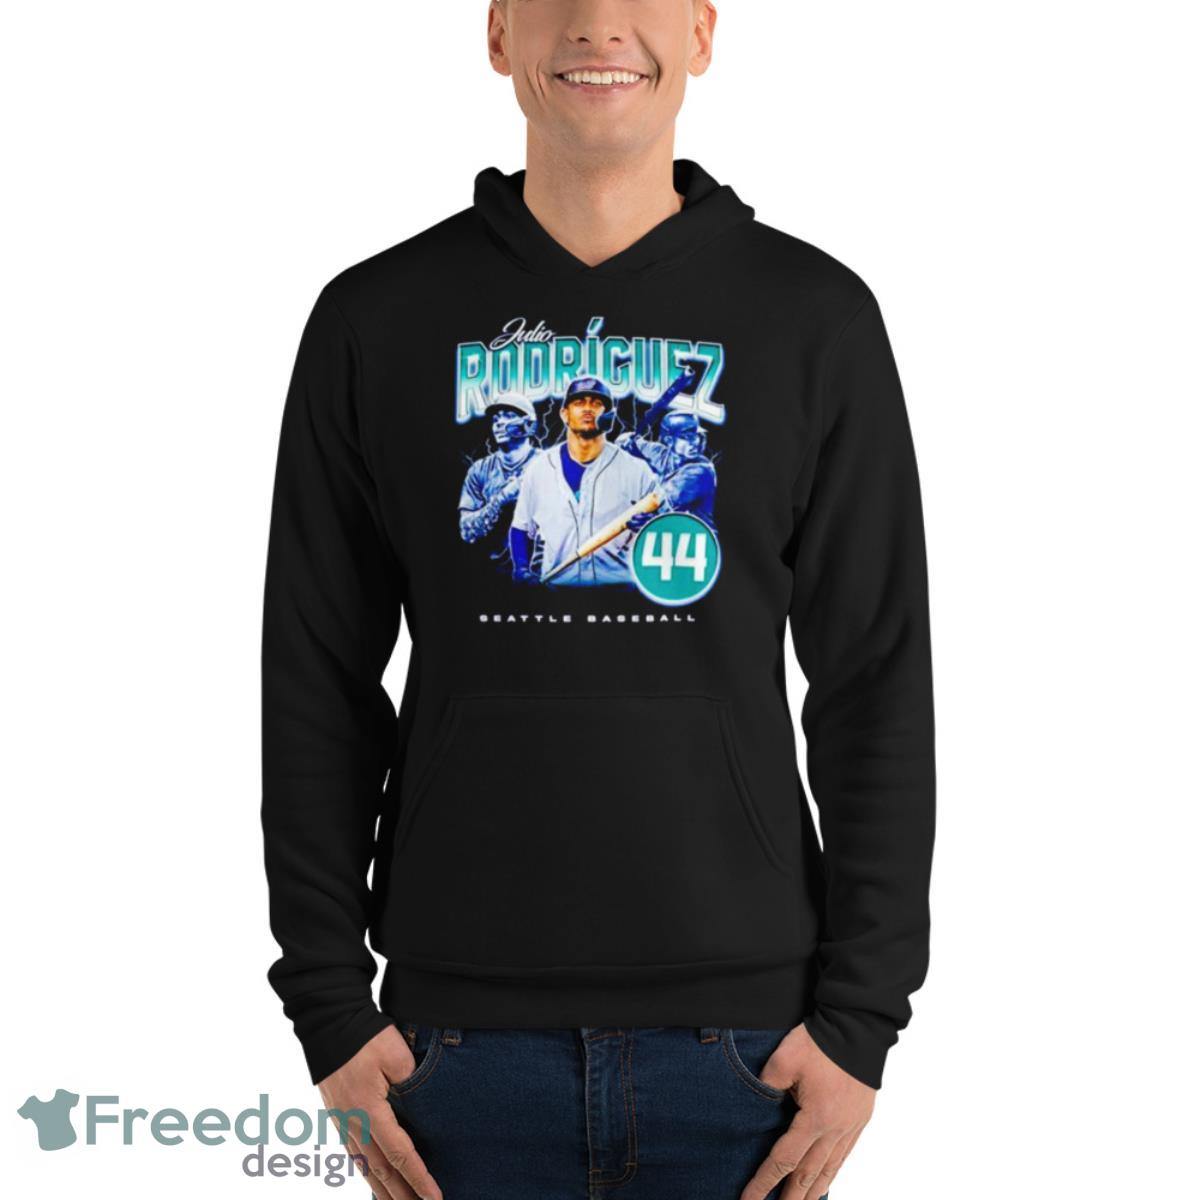 Julio Rodriguez No 44 Seattle Mariners Baseball Shirt